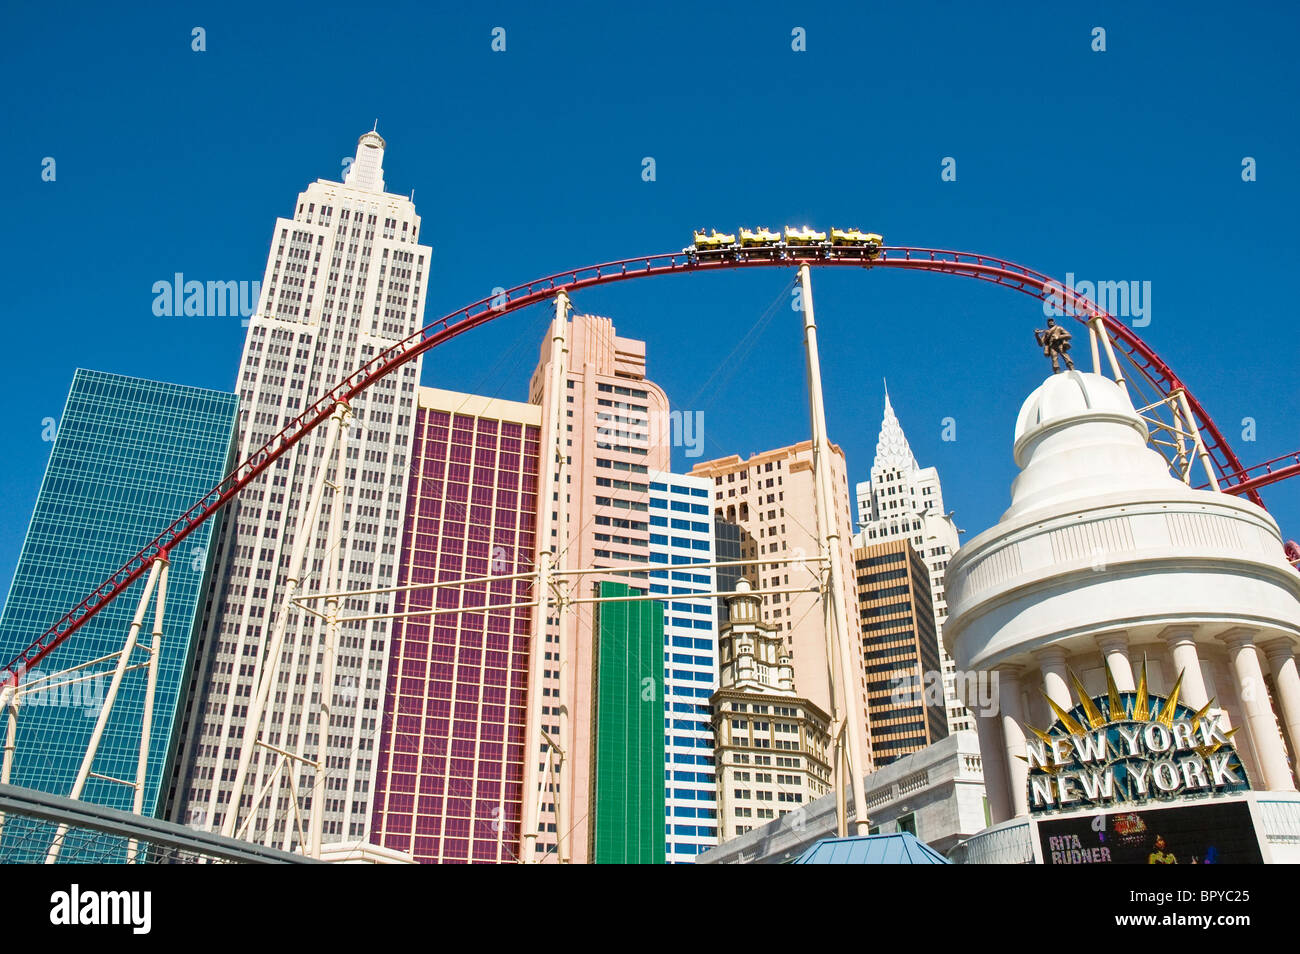 Nevada, Las Vegas, New York New York Hotel, roller coaster ride Stock Photo  - Alamy